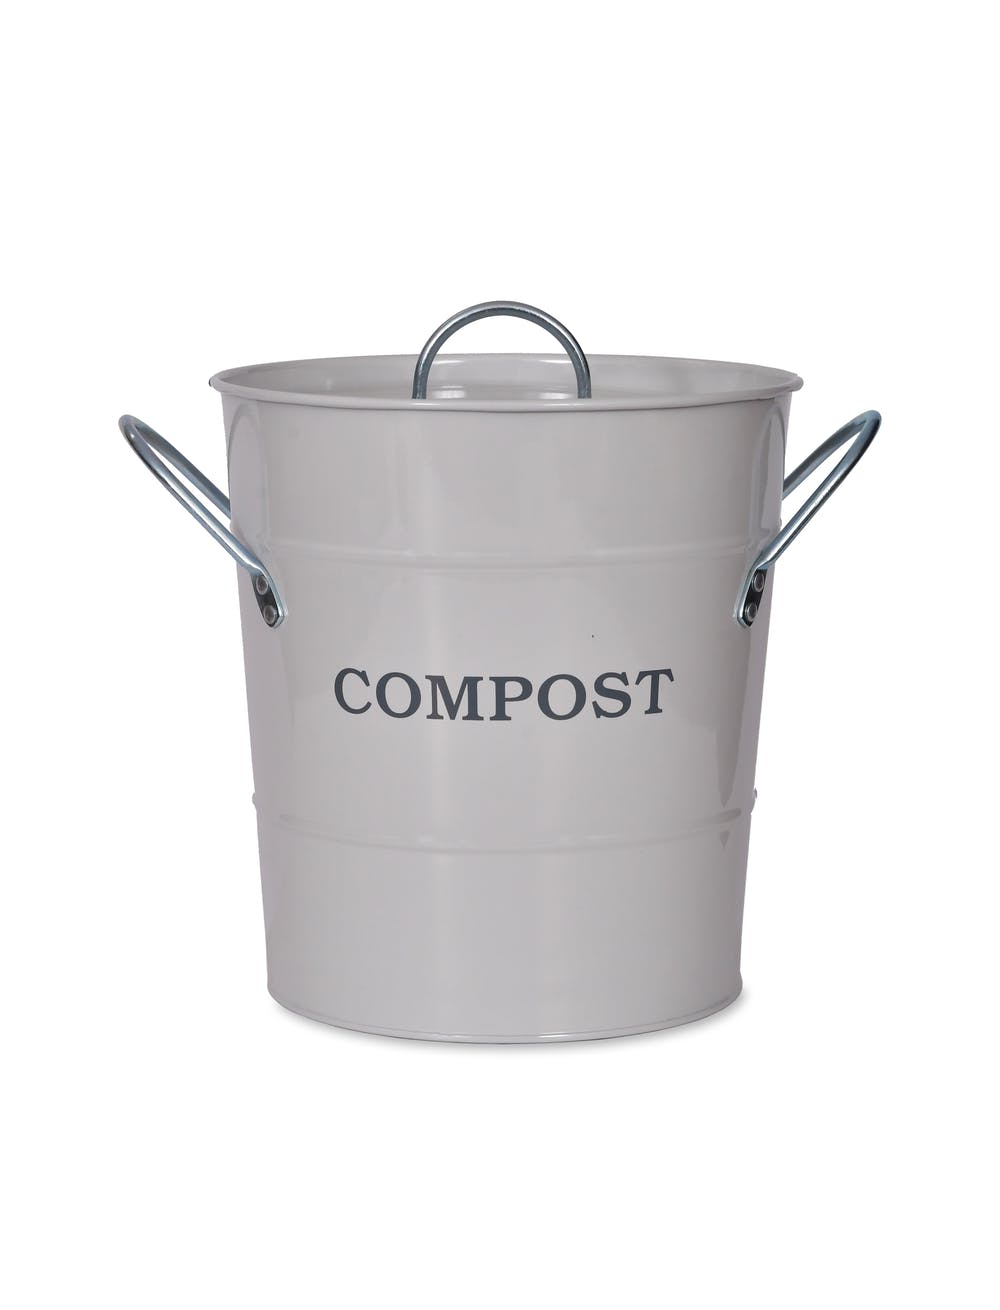 Komposteimer aus Kreidestahl